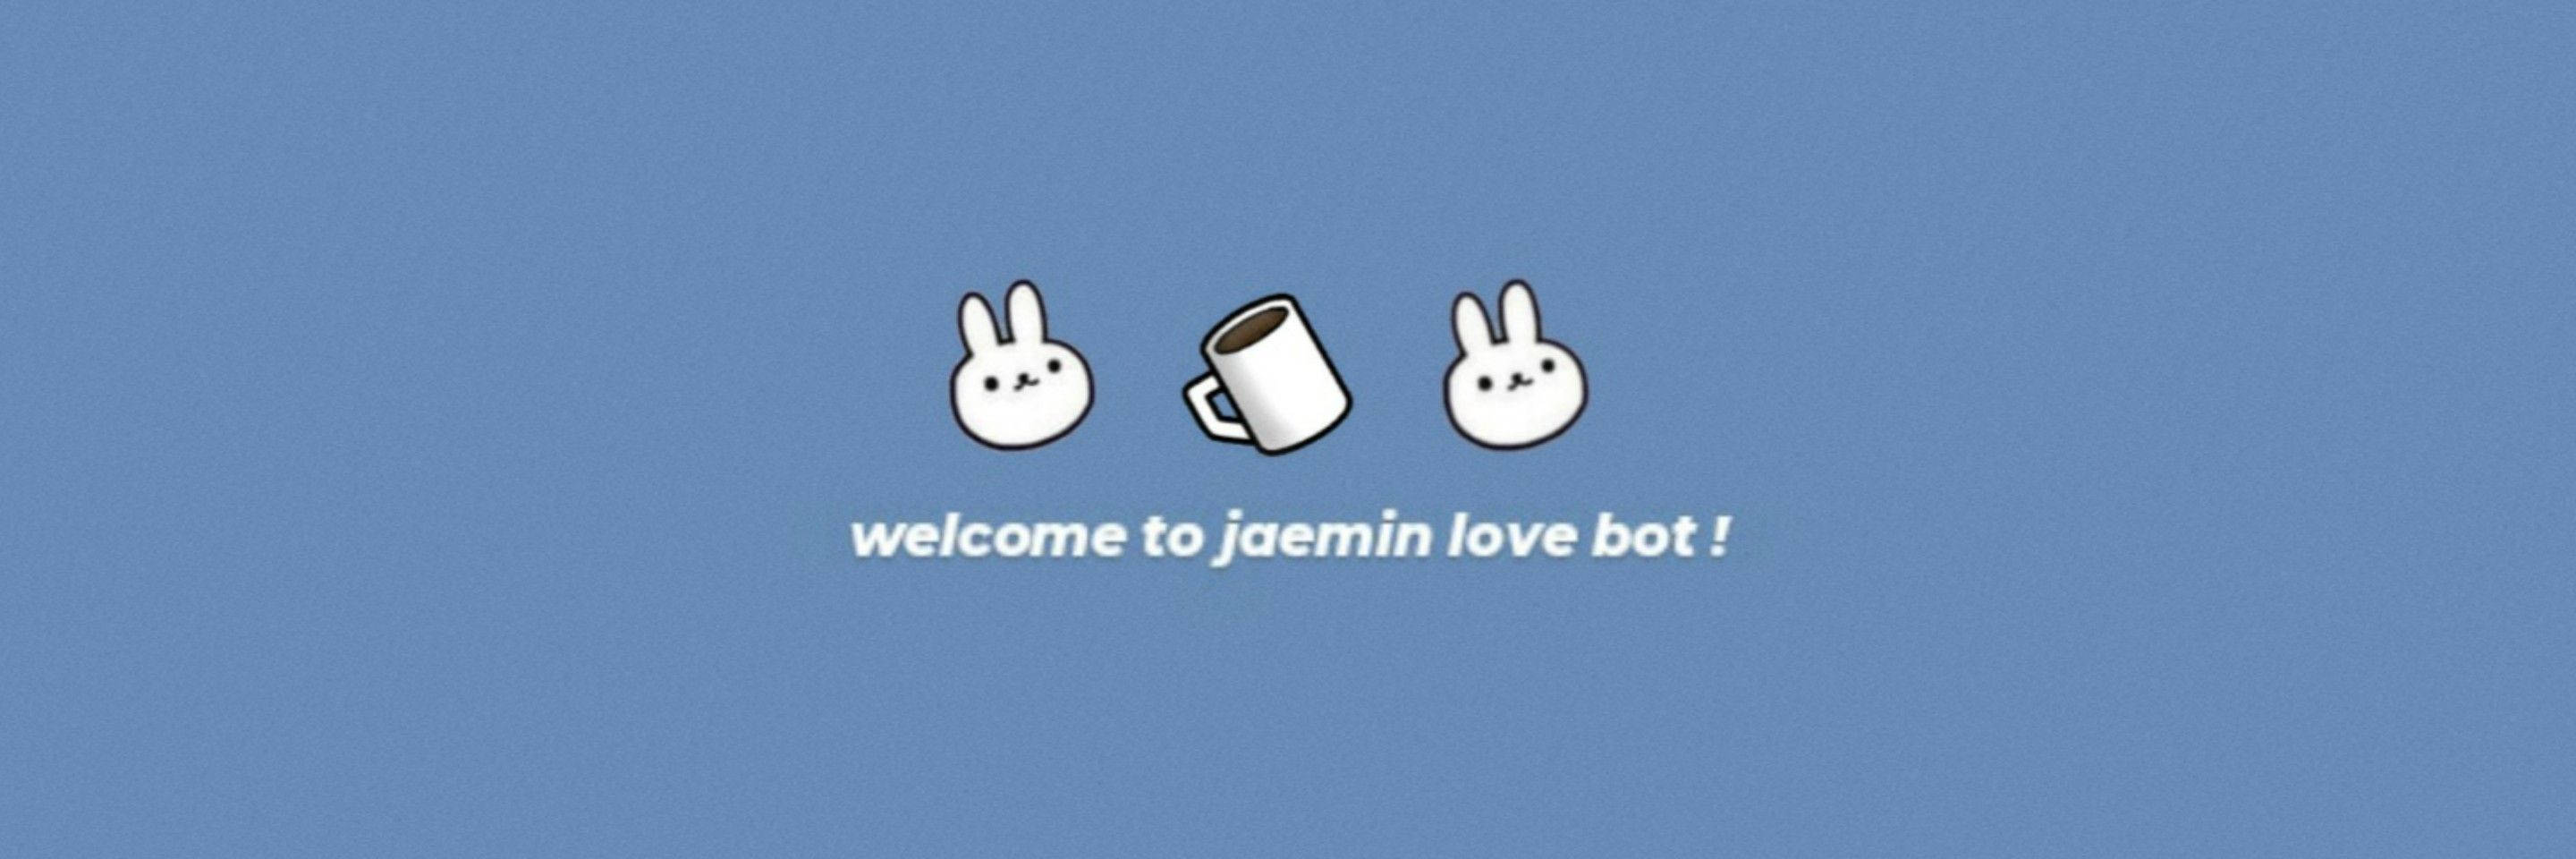 Cute Rabbit And Coffee Twitter Header Wallpaper